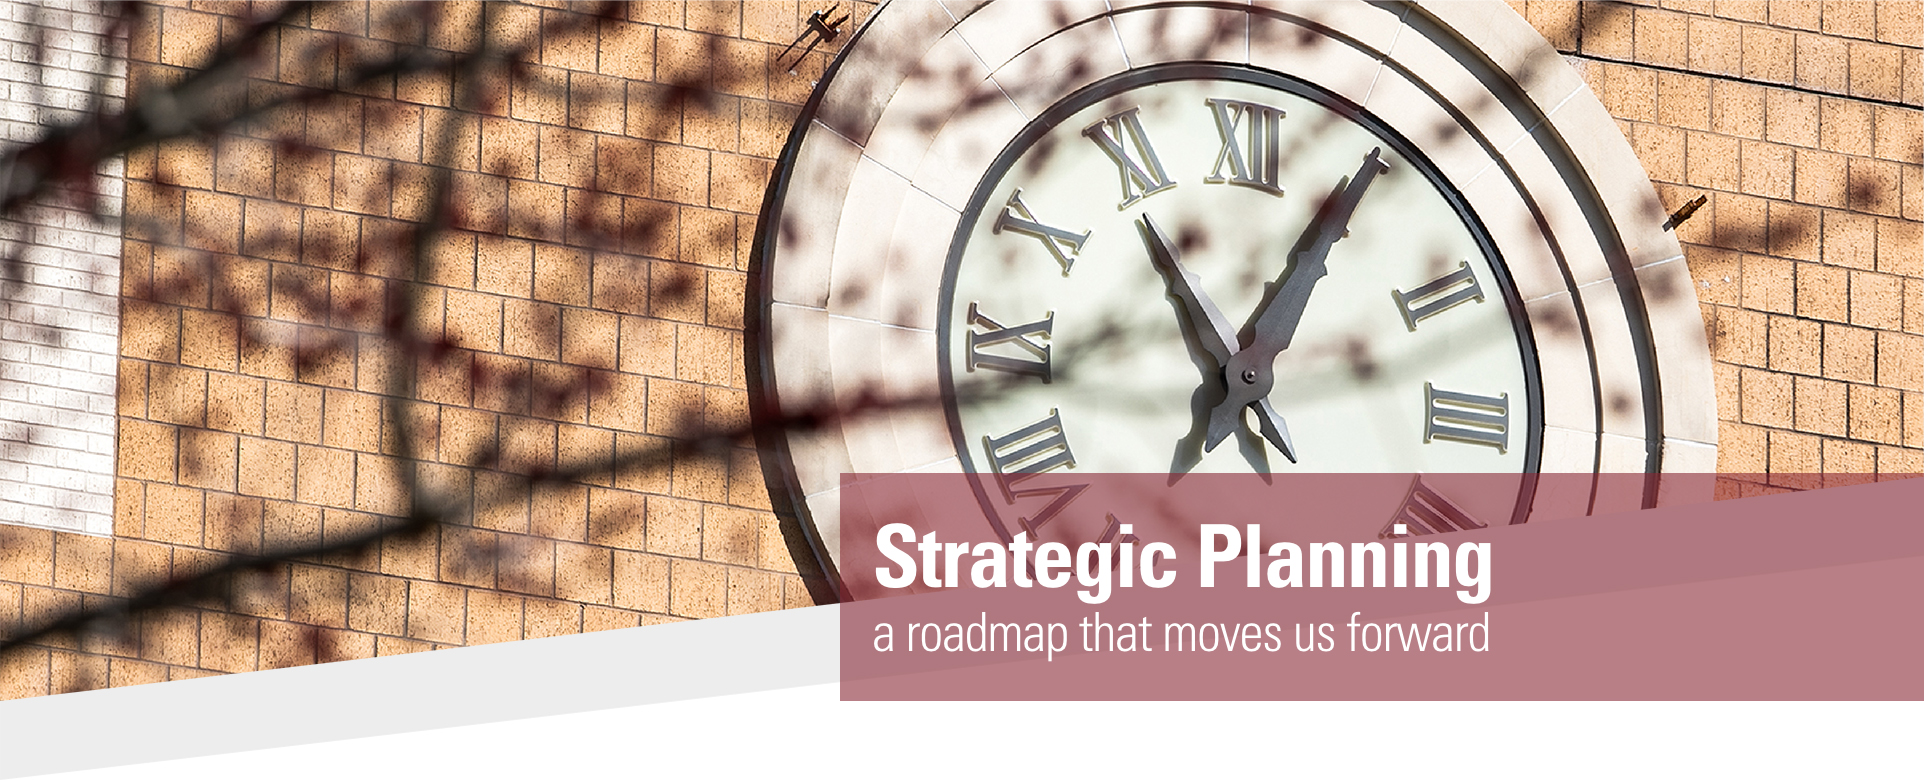 Strategic Planning a roadmap that moves us forward